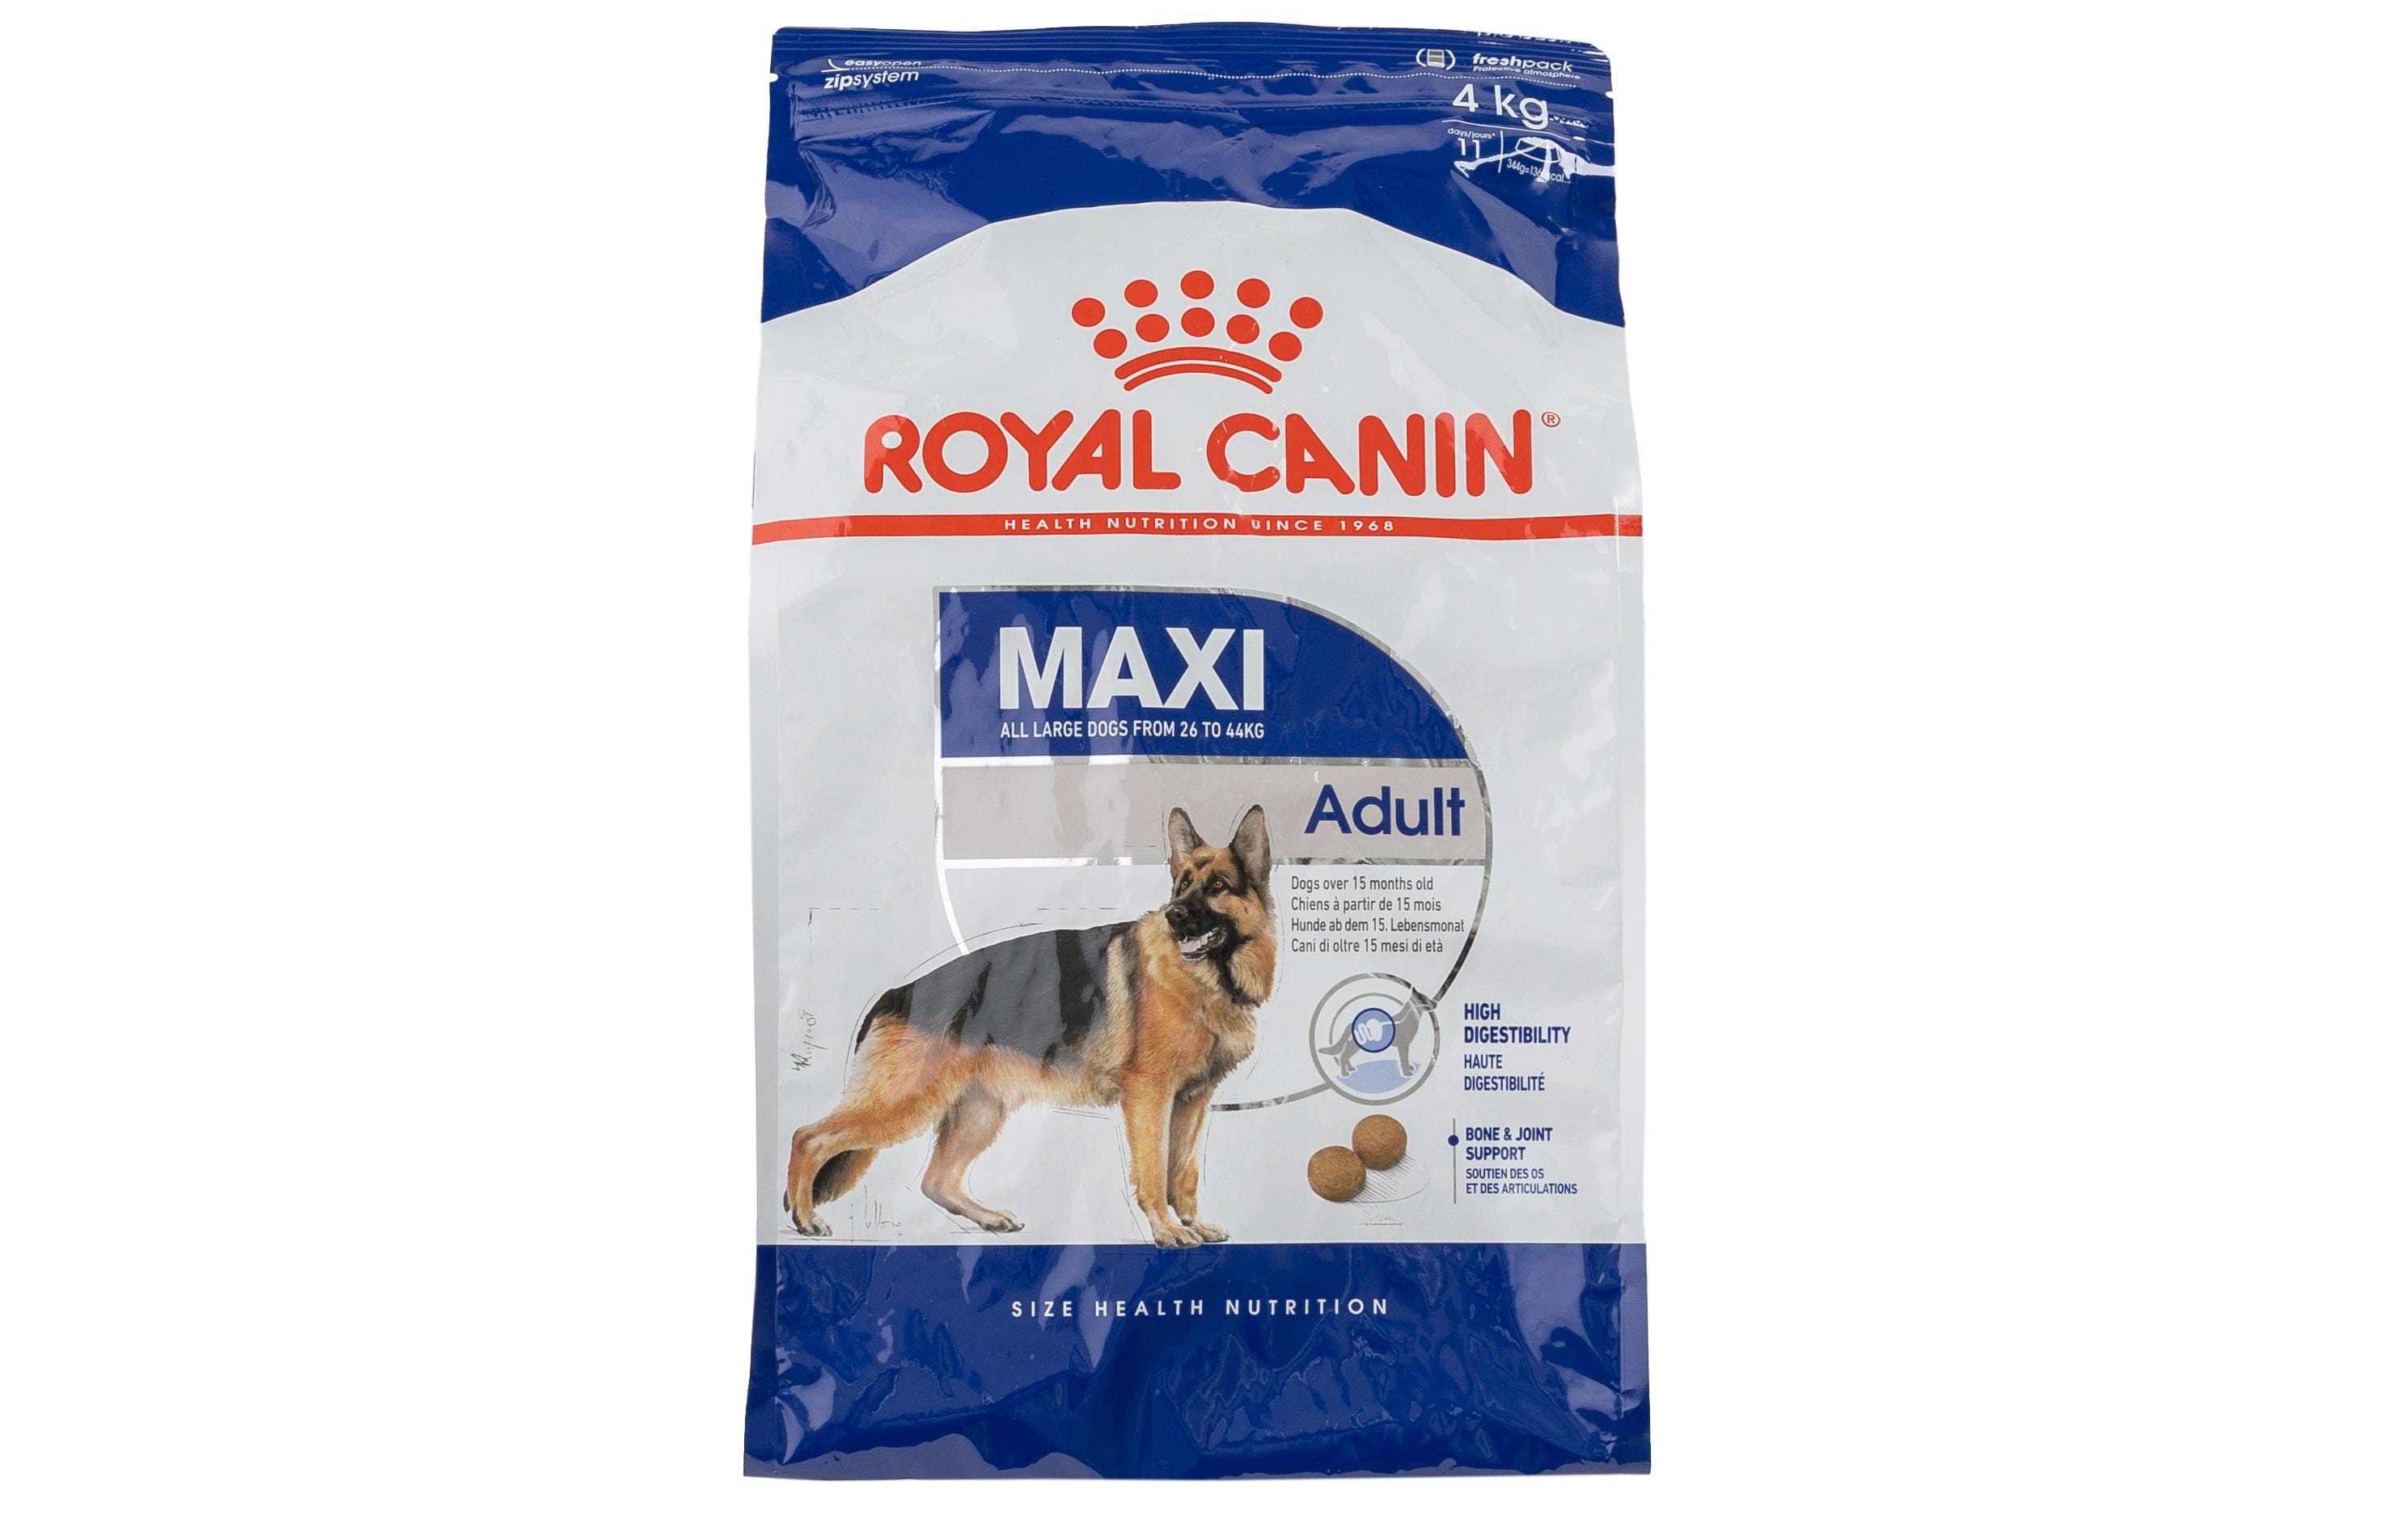 Royal Canin Trockenfutter Health Nutrition Maxi Adult, 4 kg